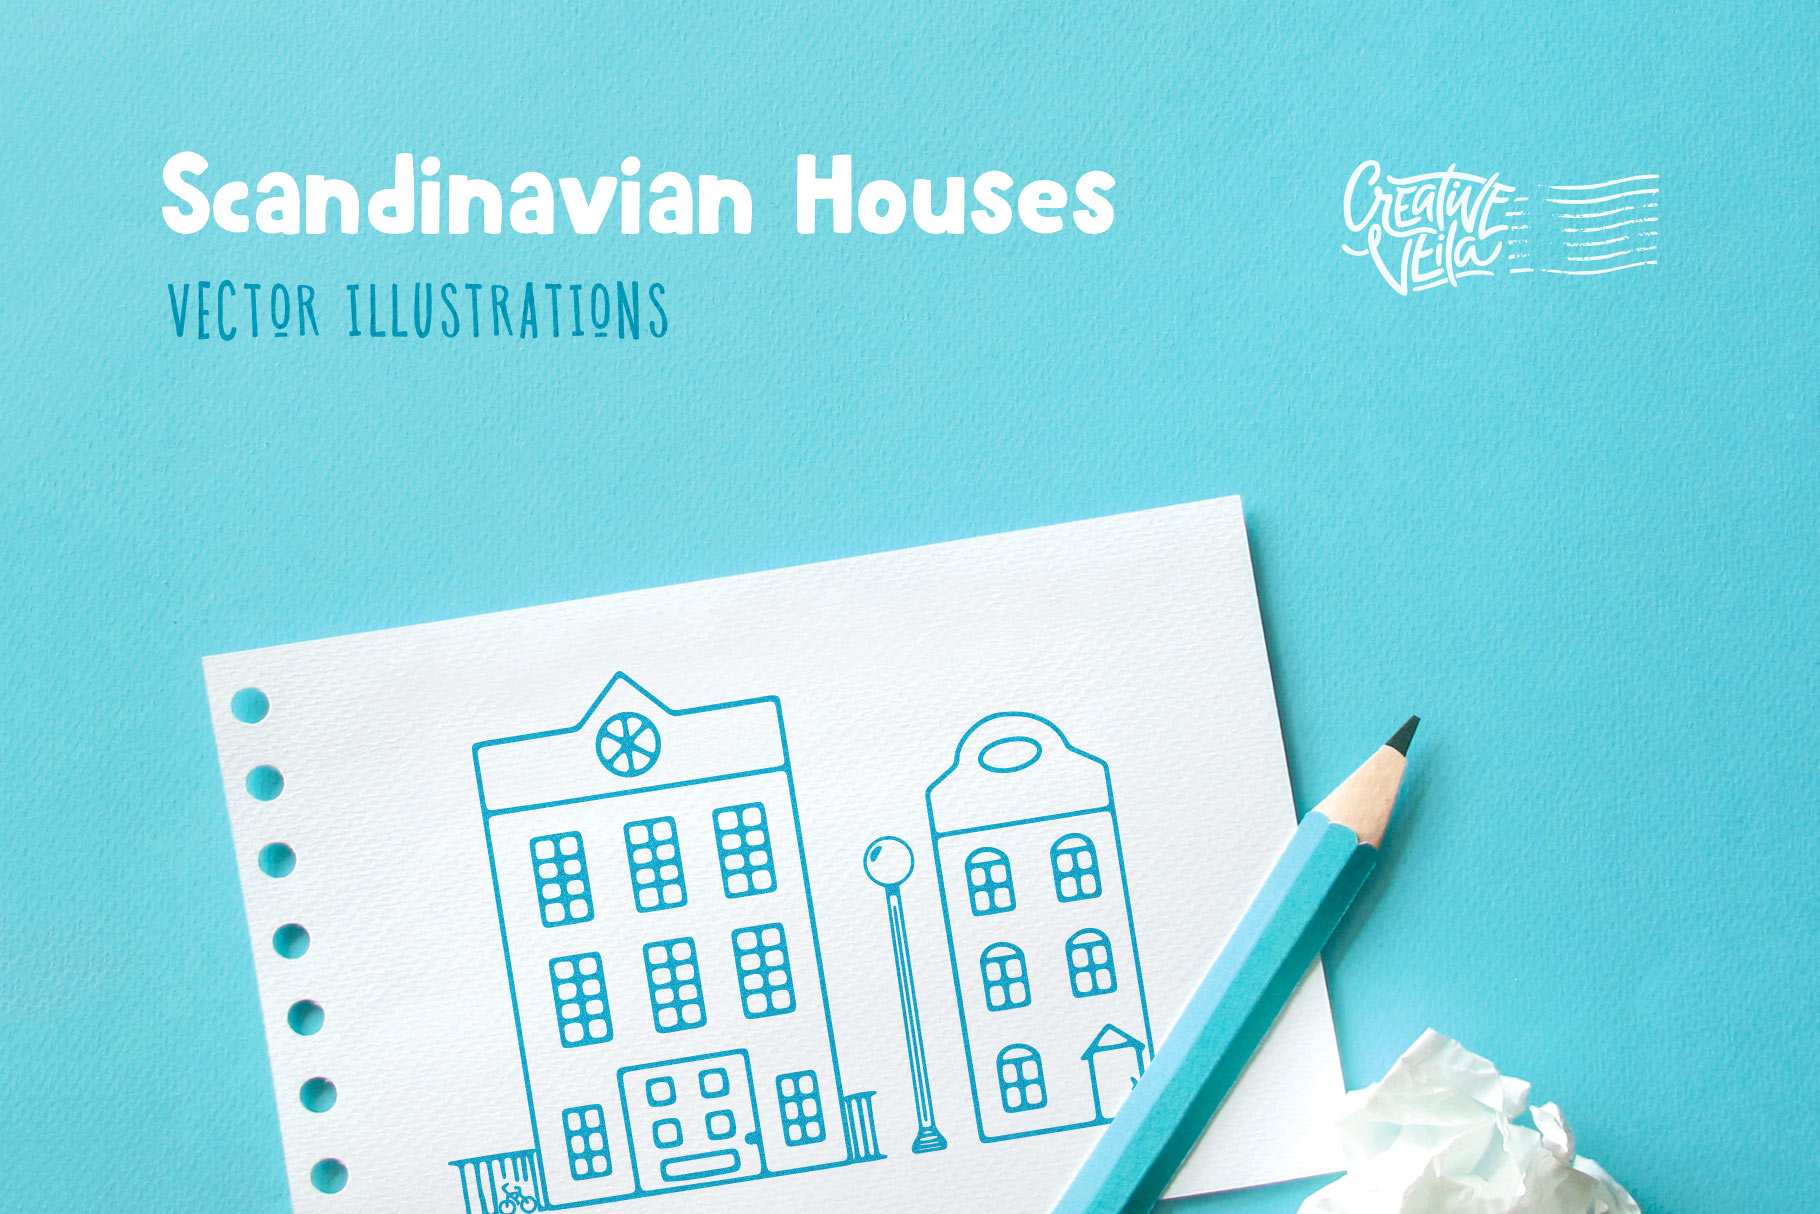 Scandinavian Houses: Free Vector Images